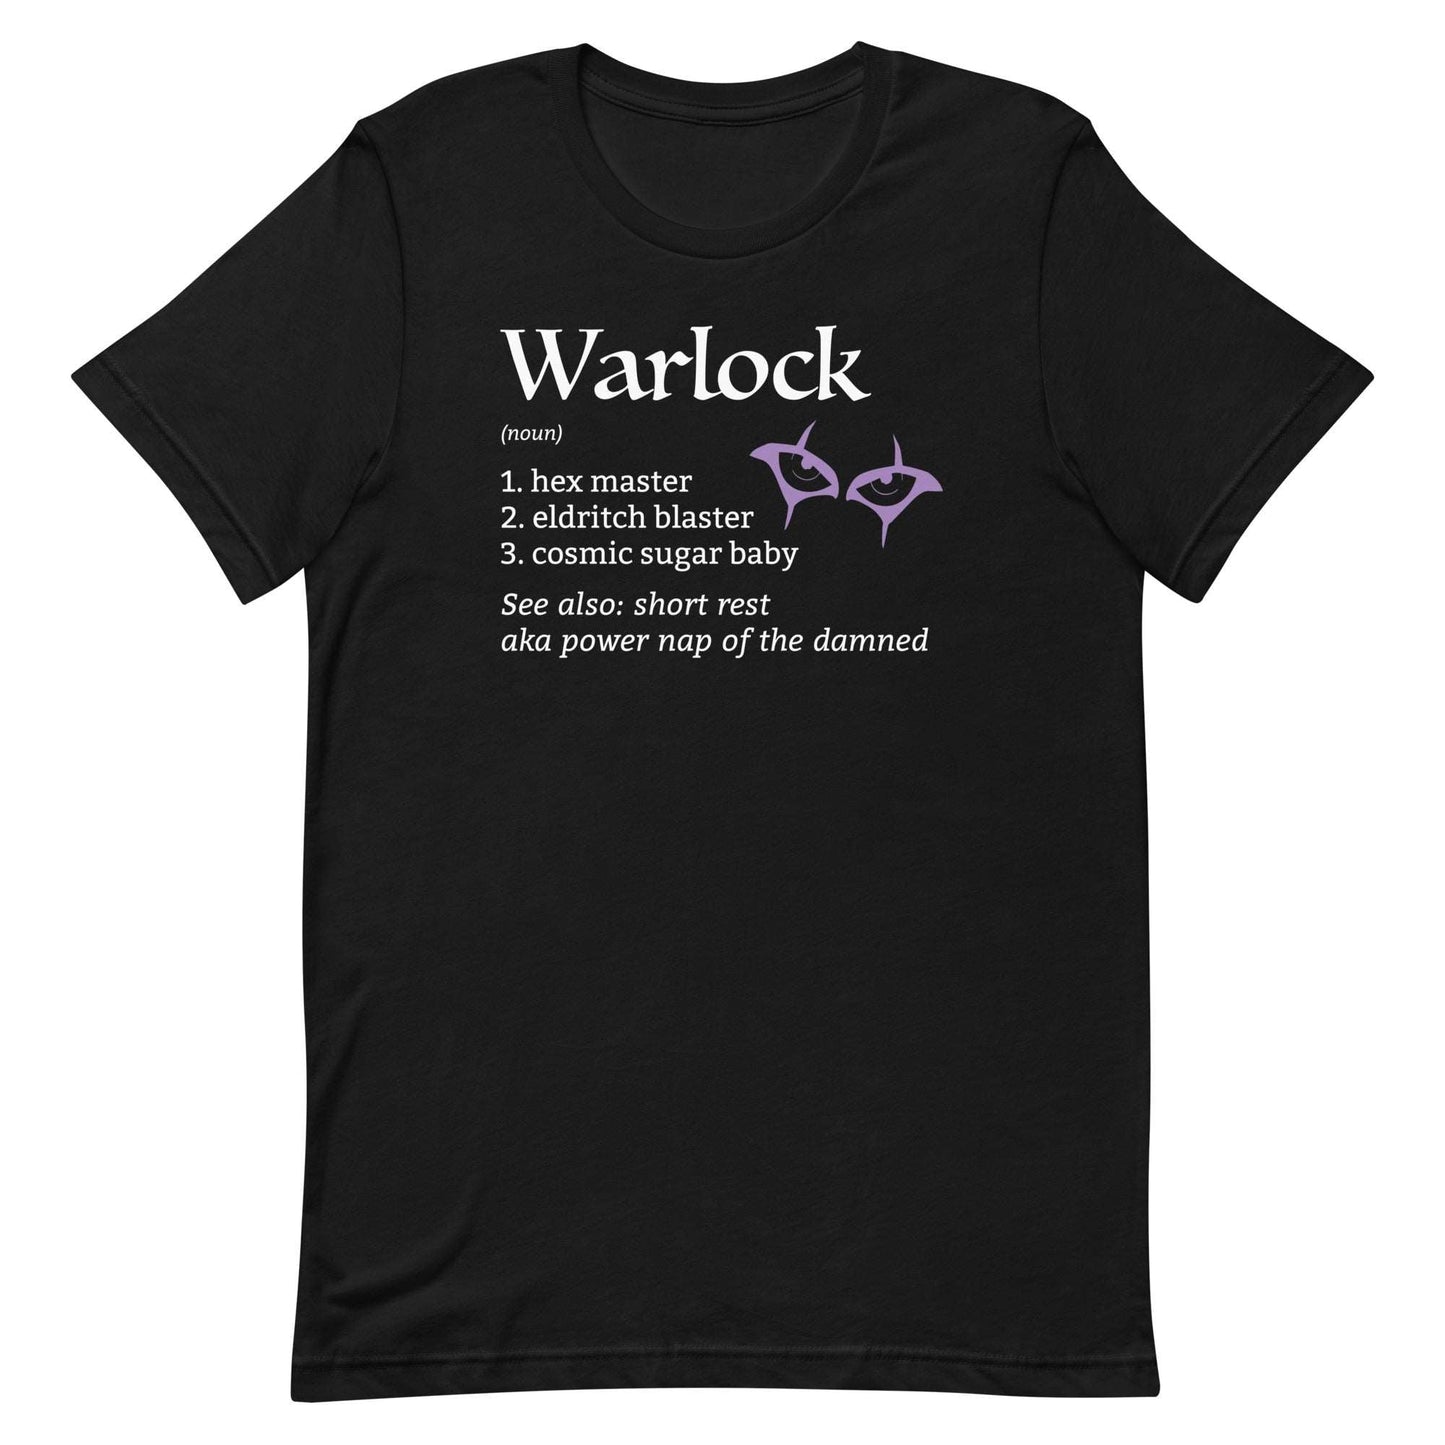 Warlock Class Definition T-Shirt – Funny DnD Definition Tee T-Shirt Black / S